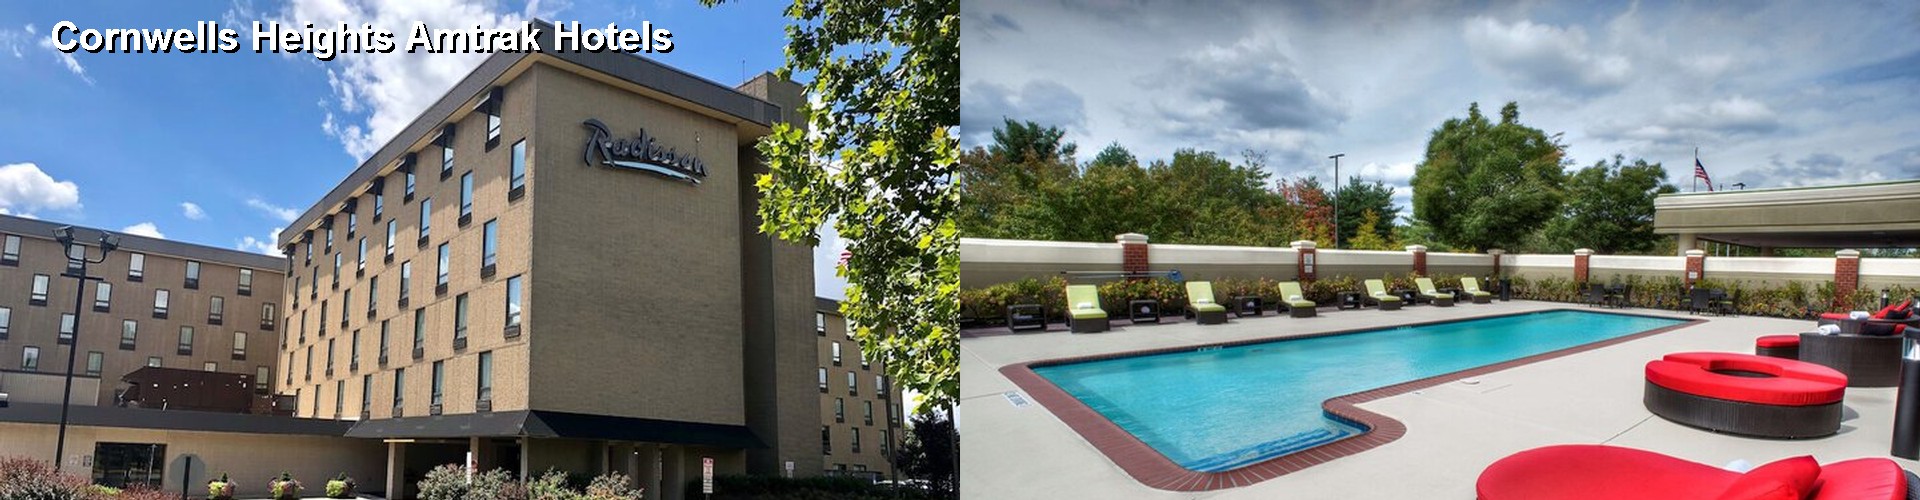 4 Best Hotels near Cornwells Heights Amtrak